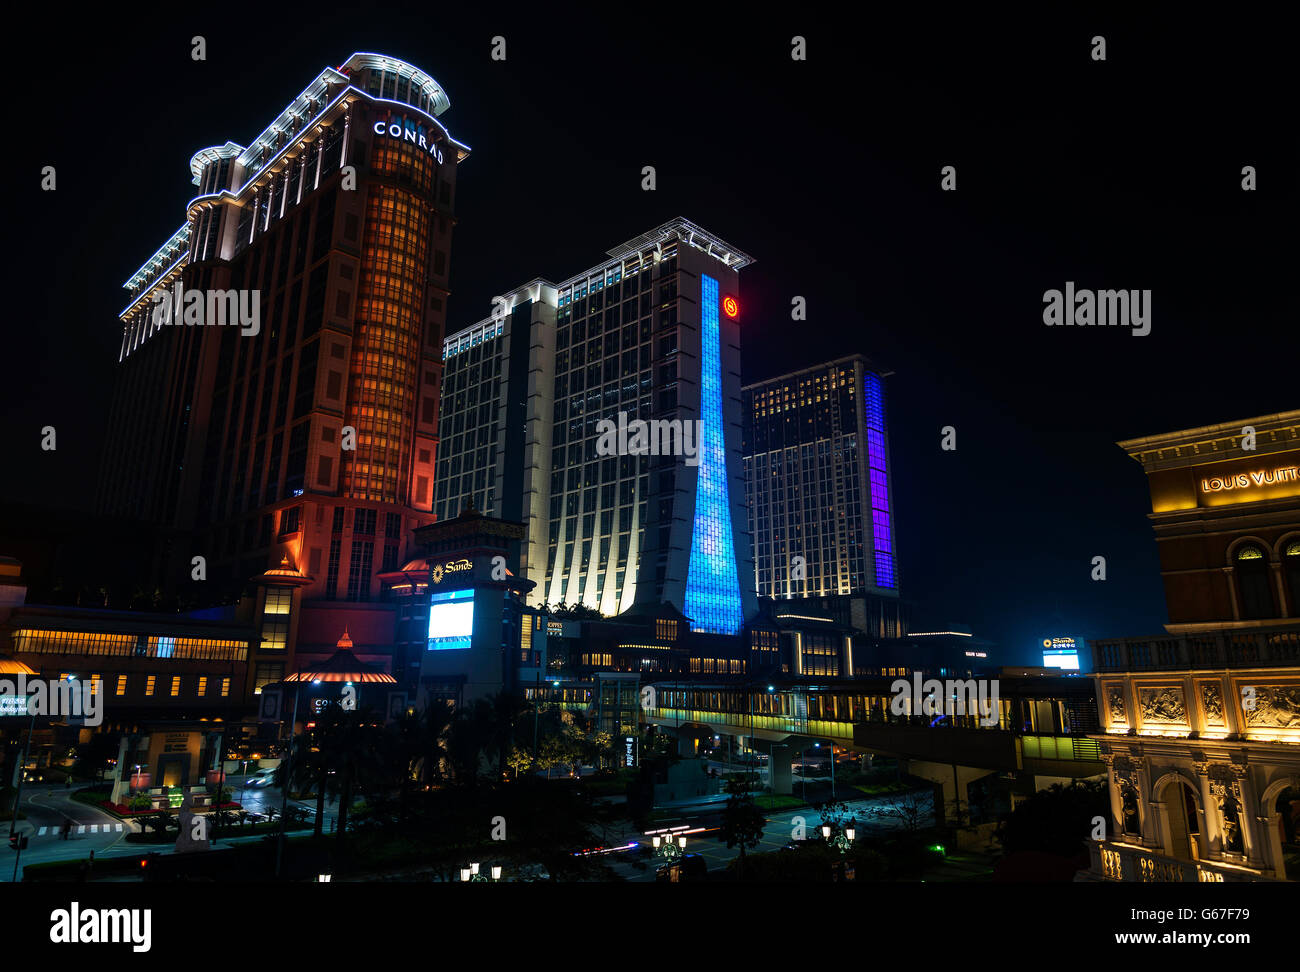 Casino Hotel Resorts Neon am Cotai strip Macao Macau China in der Nacht Stockfoto